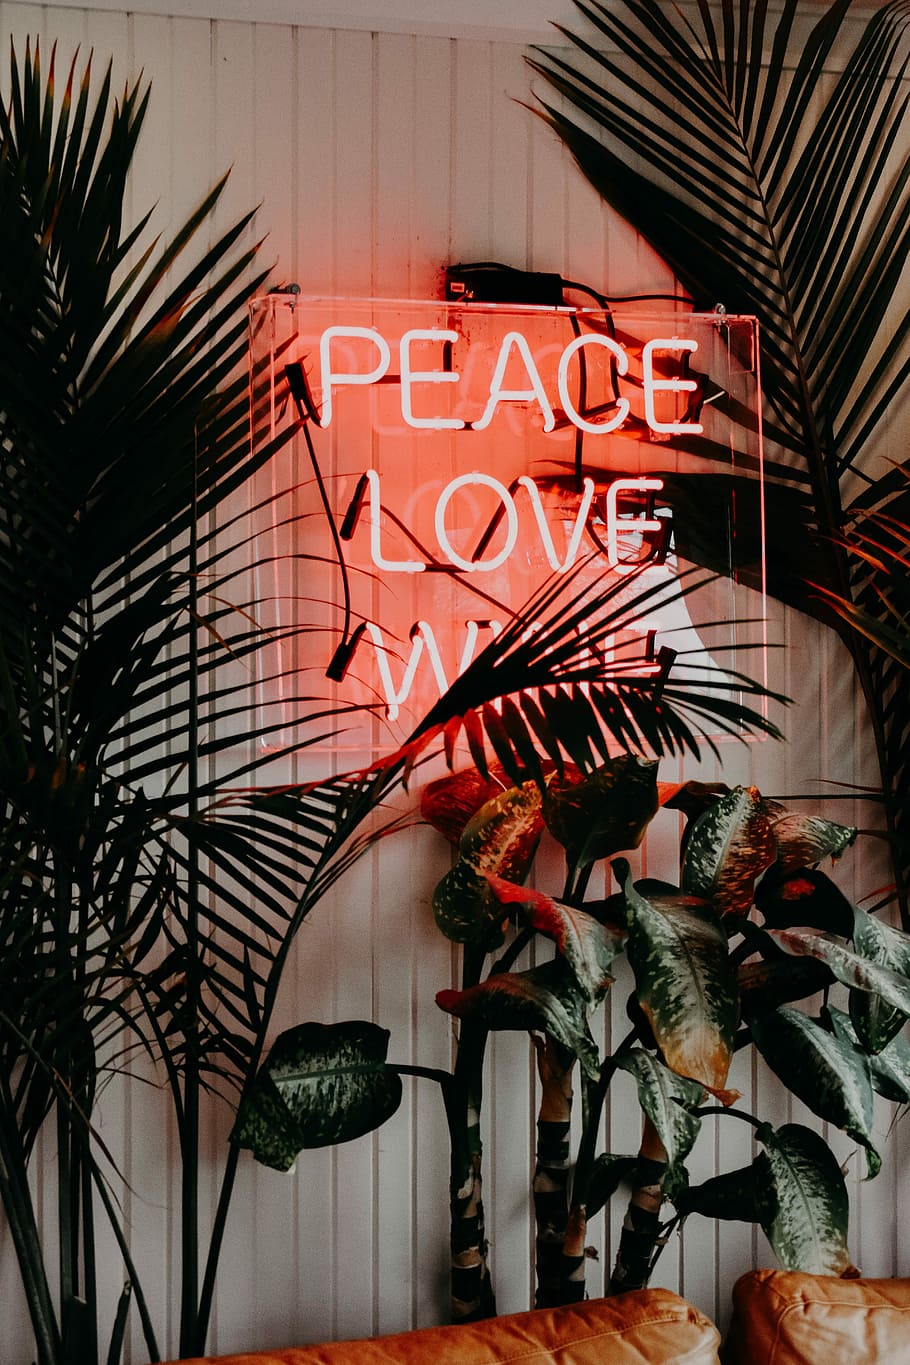 Hd Wallpaper Peace Love Neon Signage Near Green Leaf Plants Plants